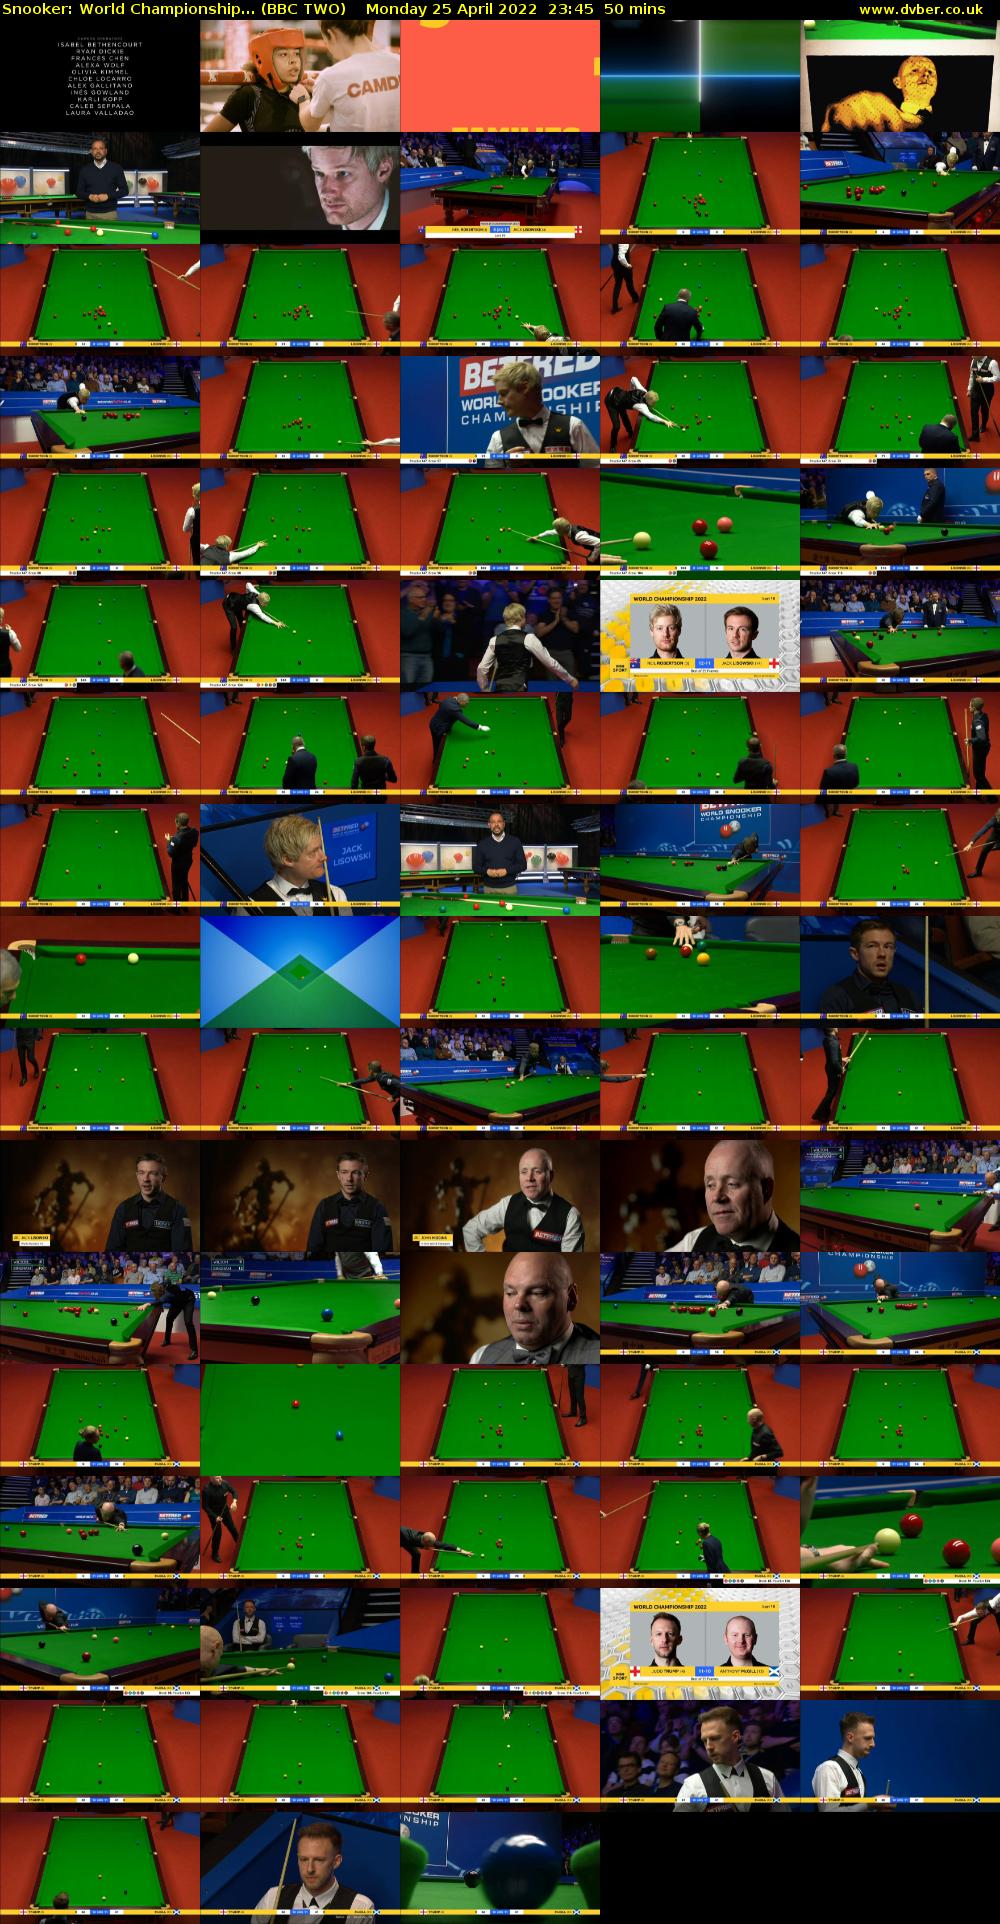 Snooker: World Championship... (BBC TWO) Monday 25 April 2022 23:45 - 00:35